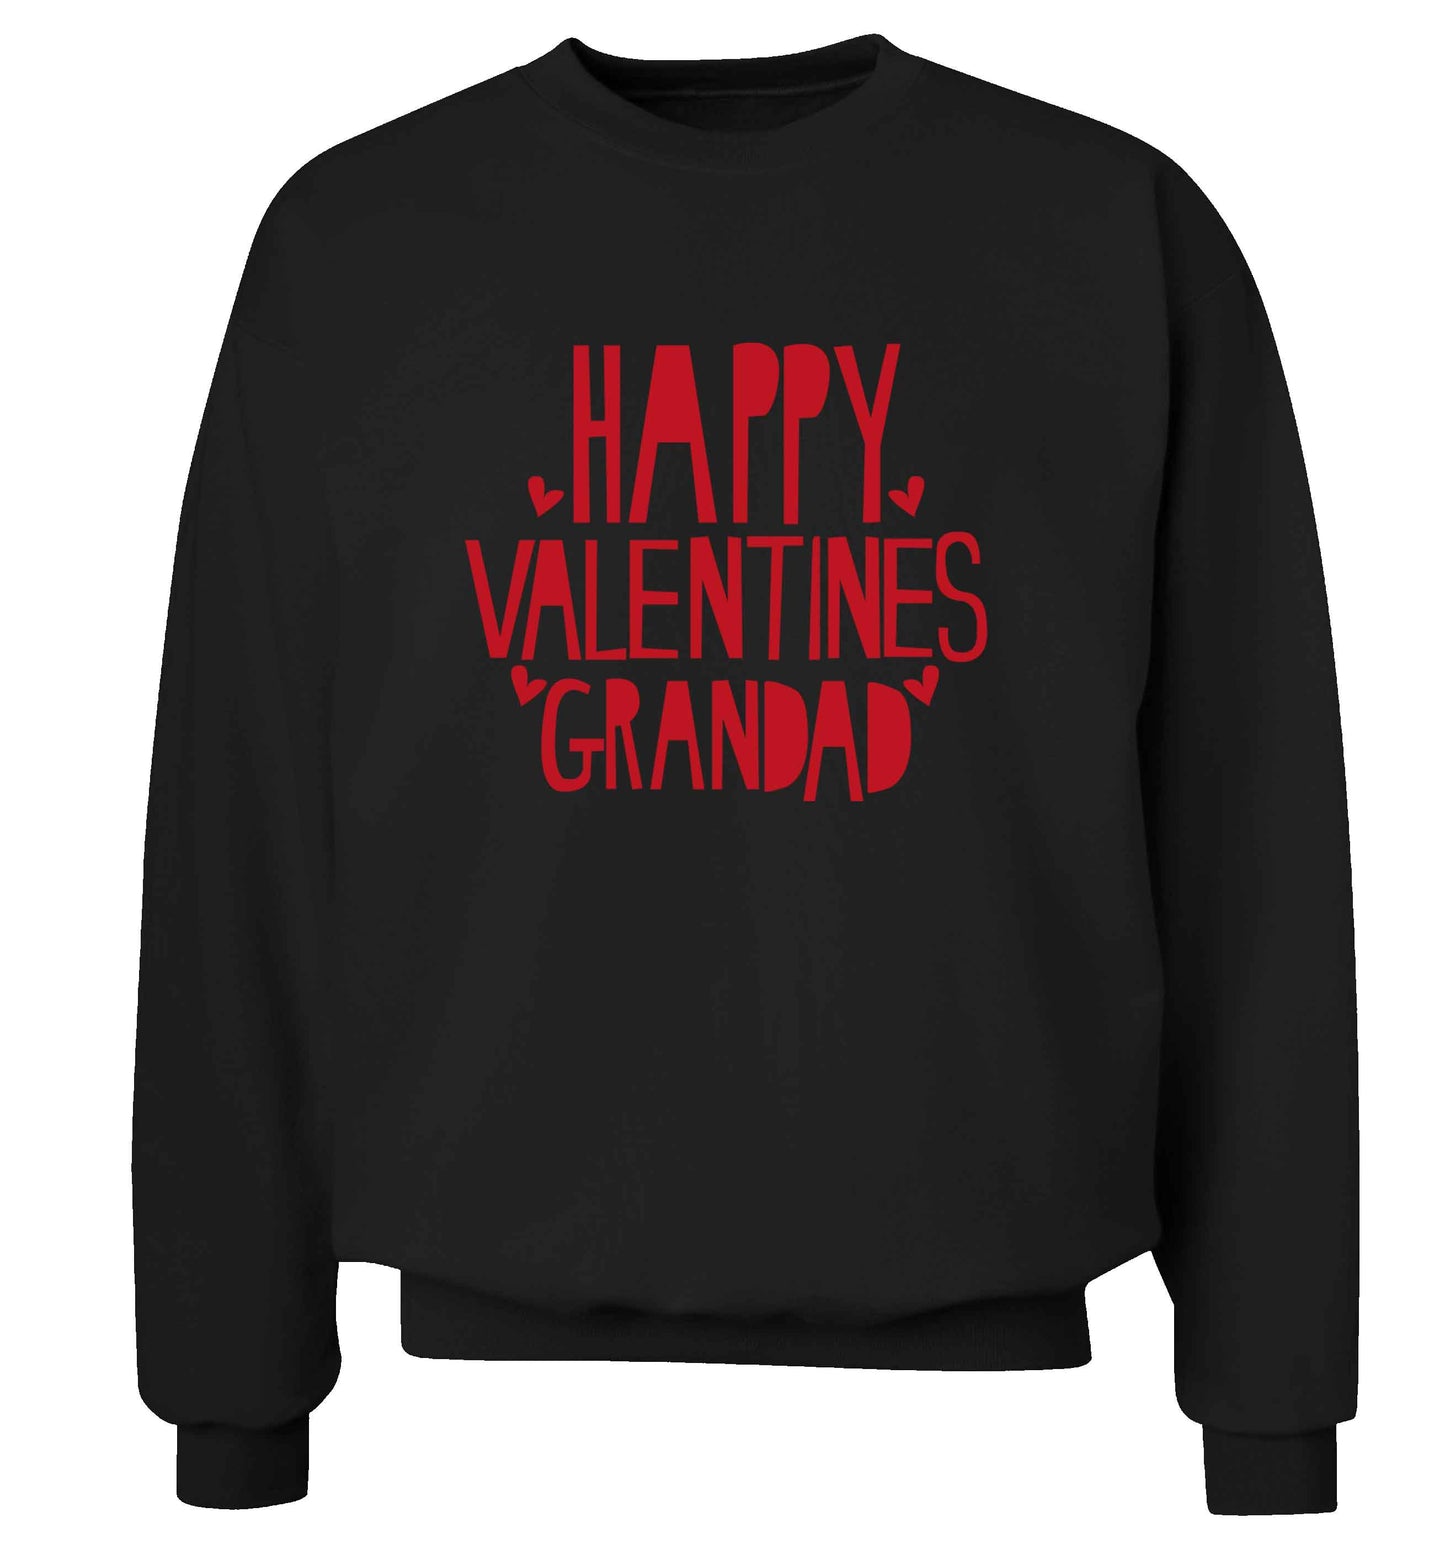 Happy valentines grandad adult's unisex black sweater 2XL